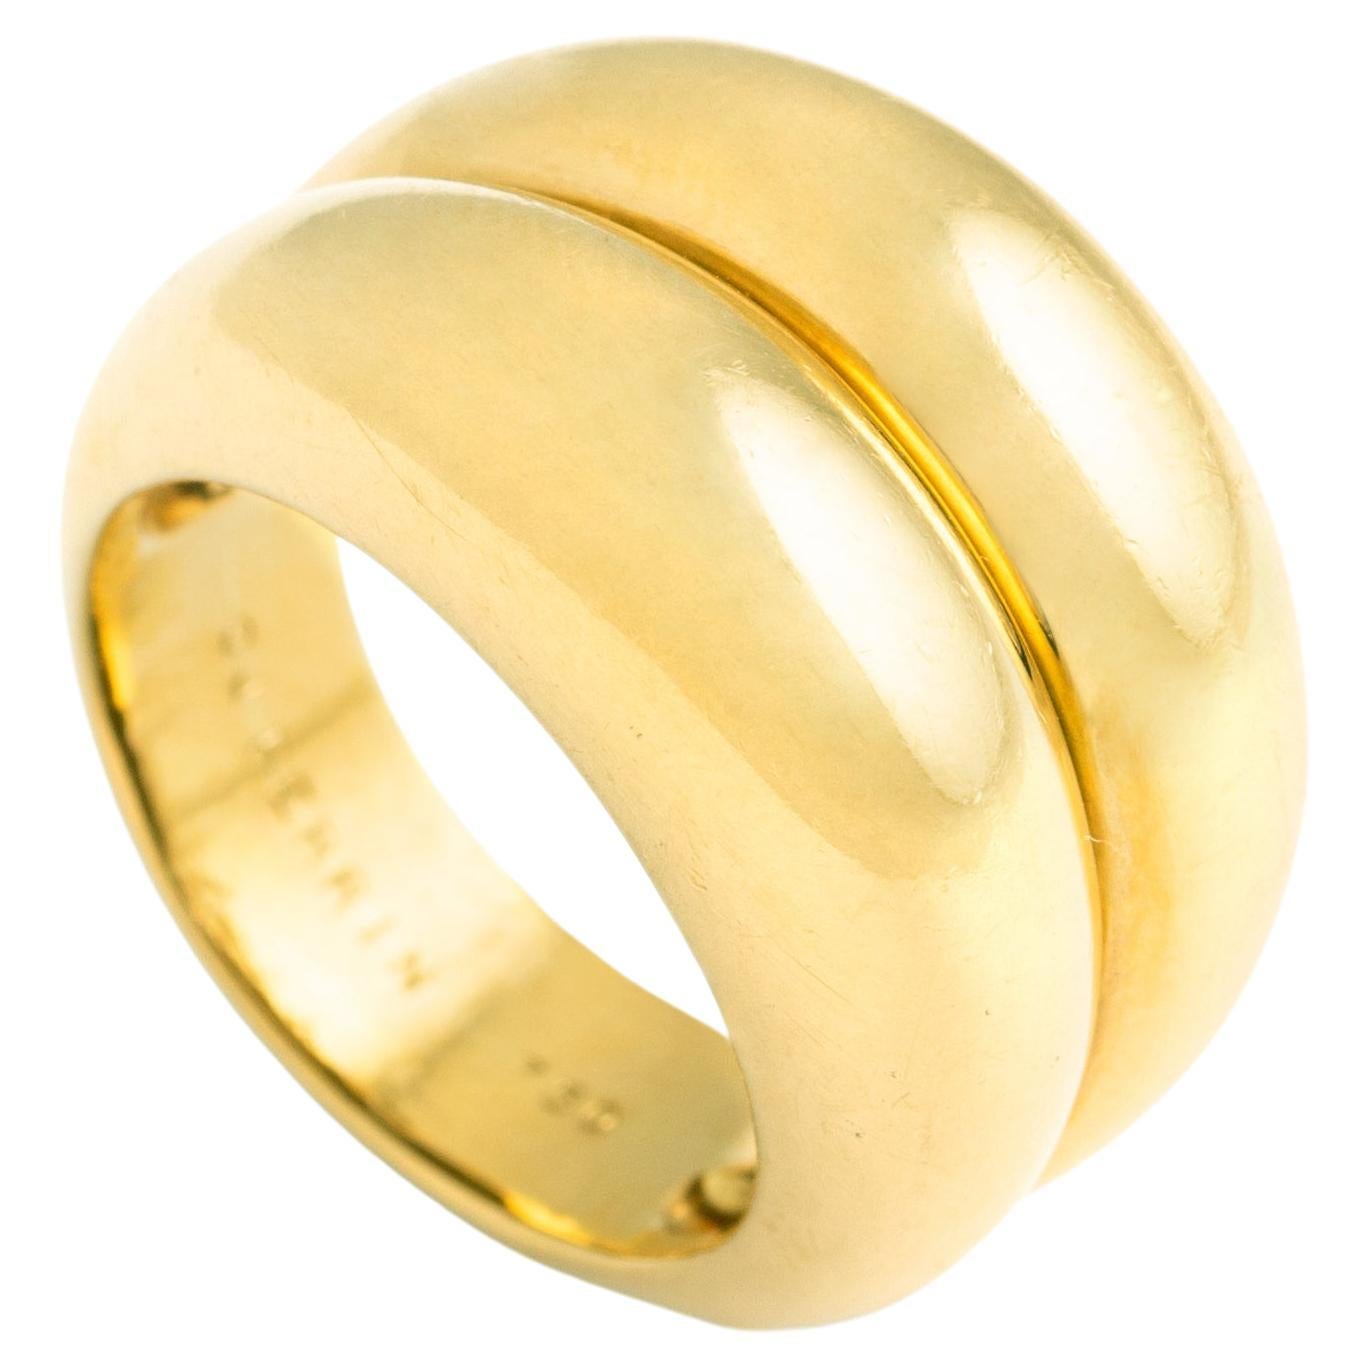 O.J. Perrin Paris Collection Verona Yellow Gold 18k Ring